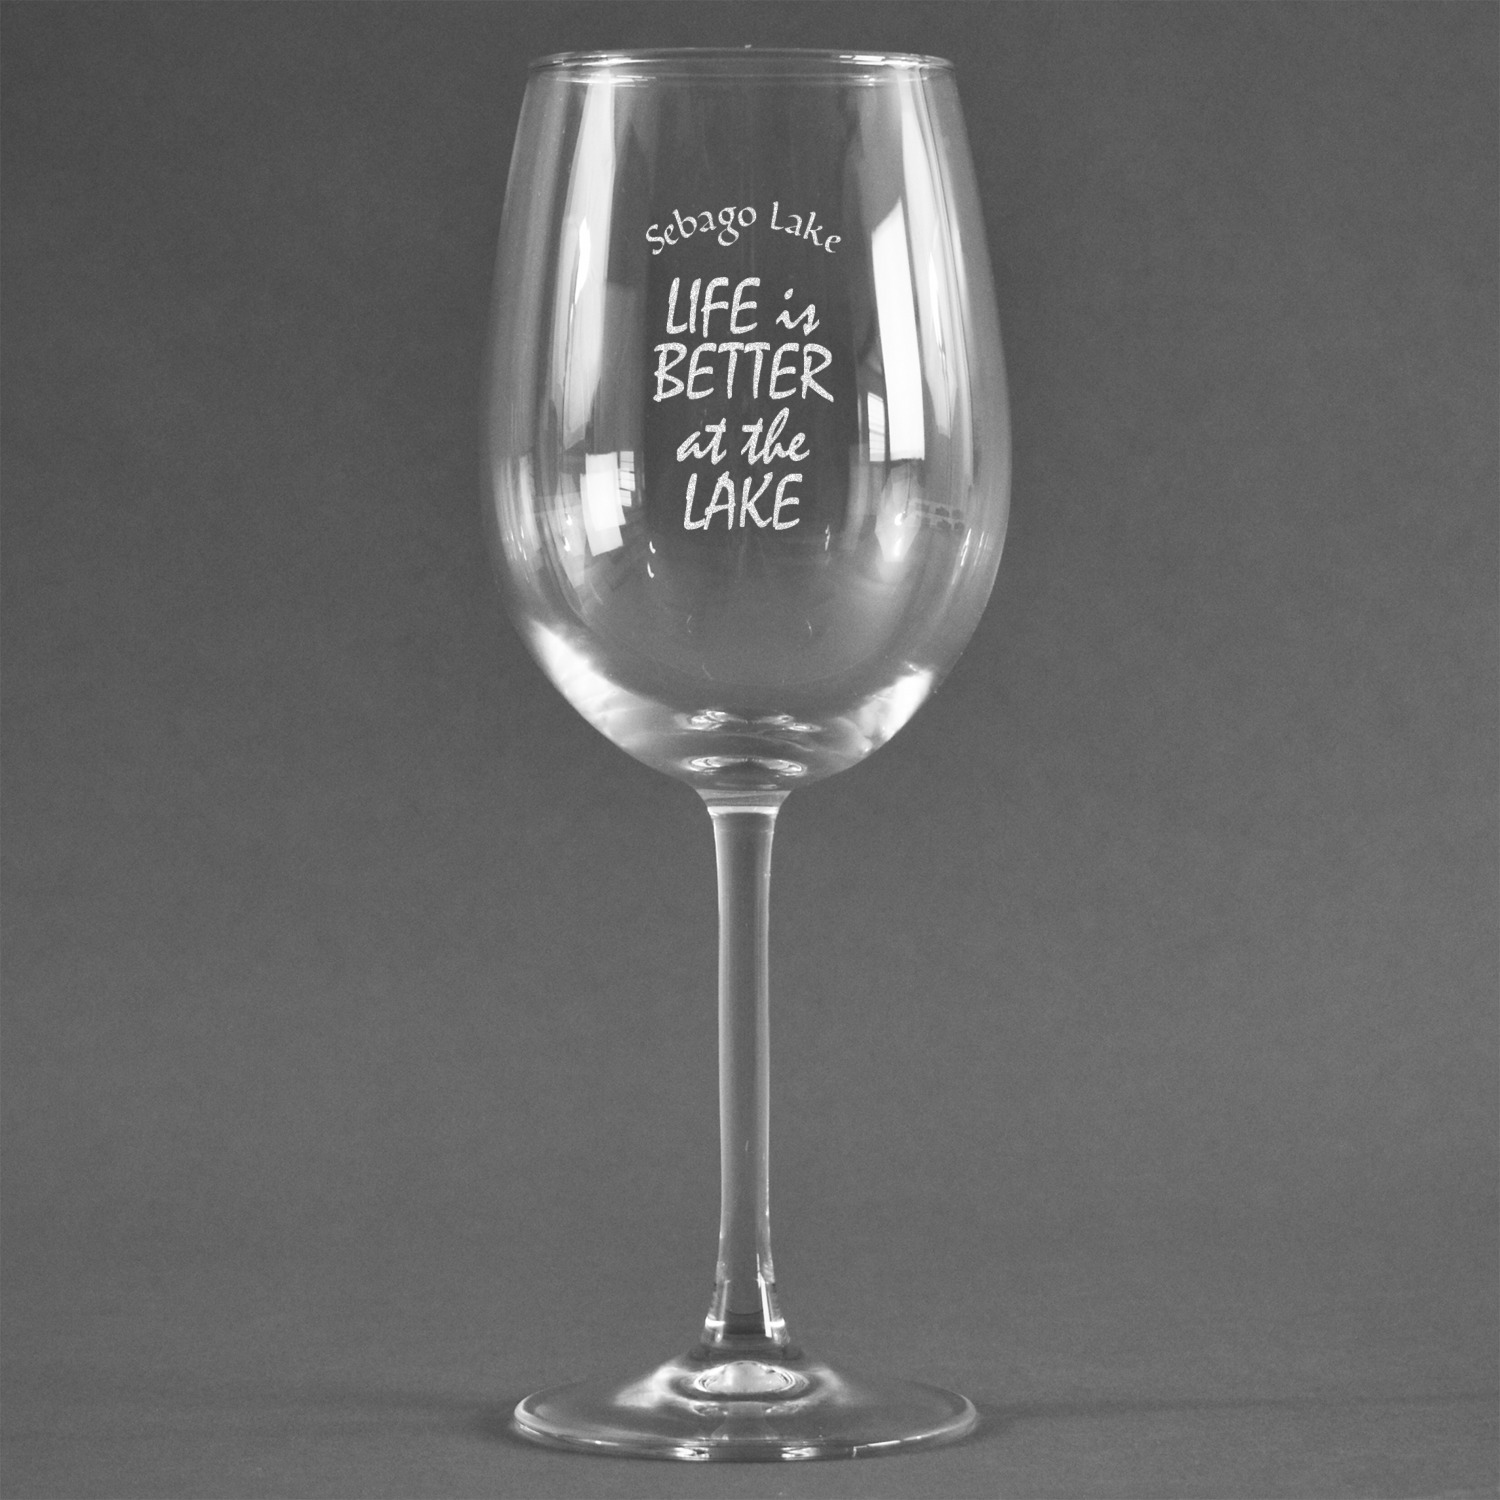 Custom Anniversary Wine Glasses - Design: A1